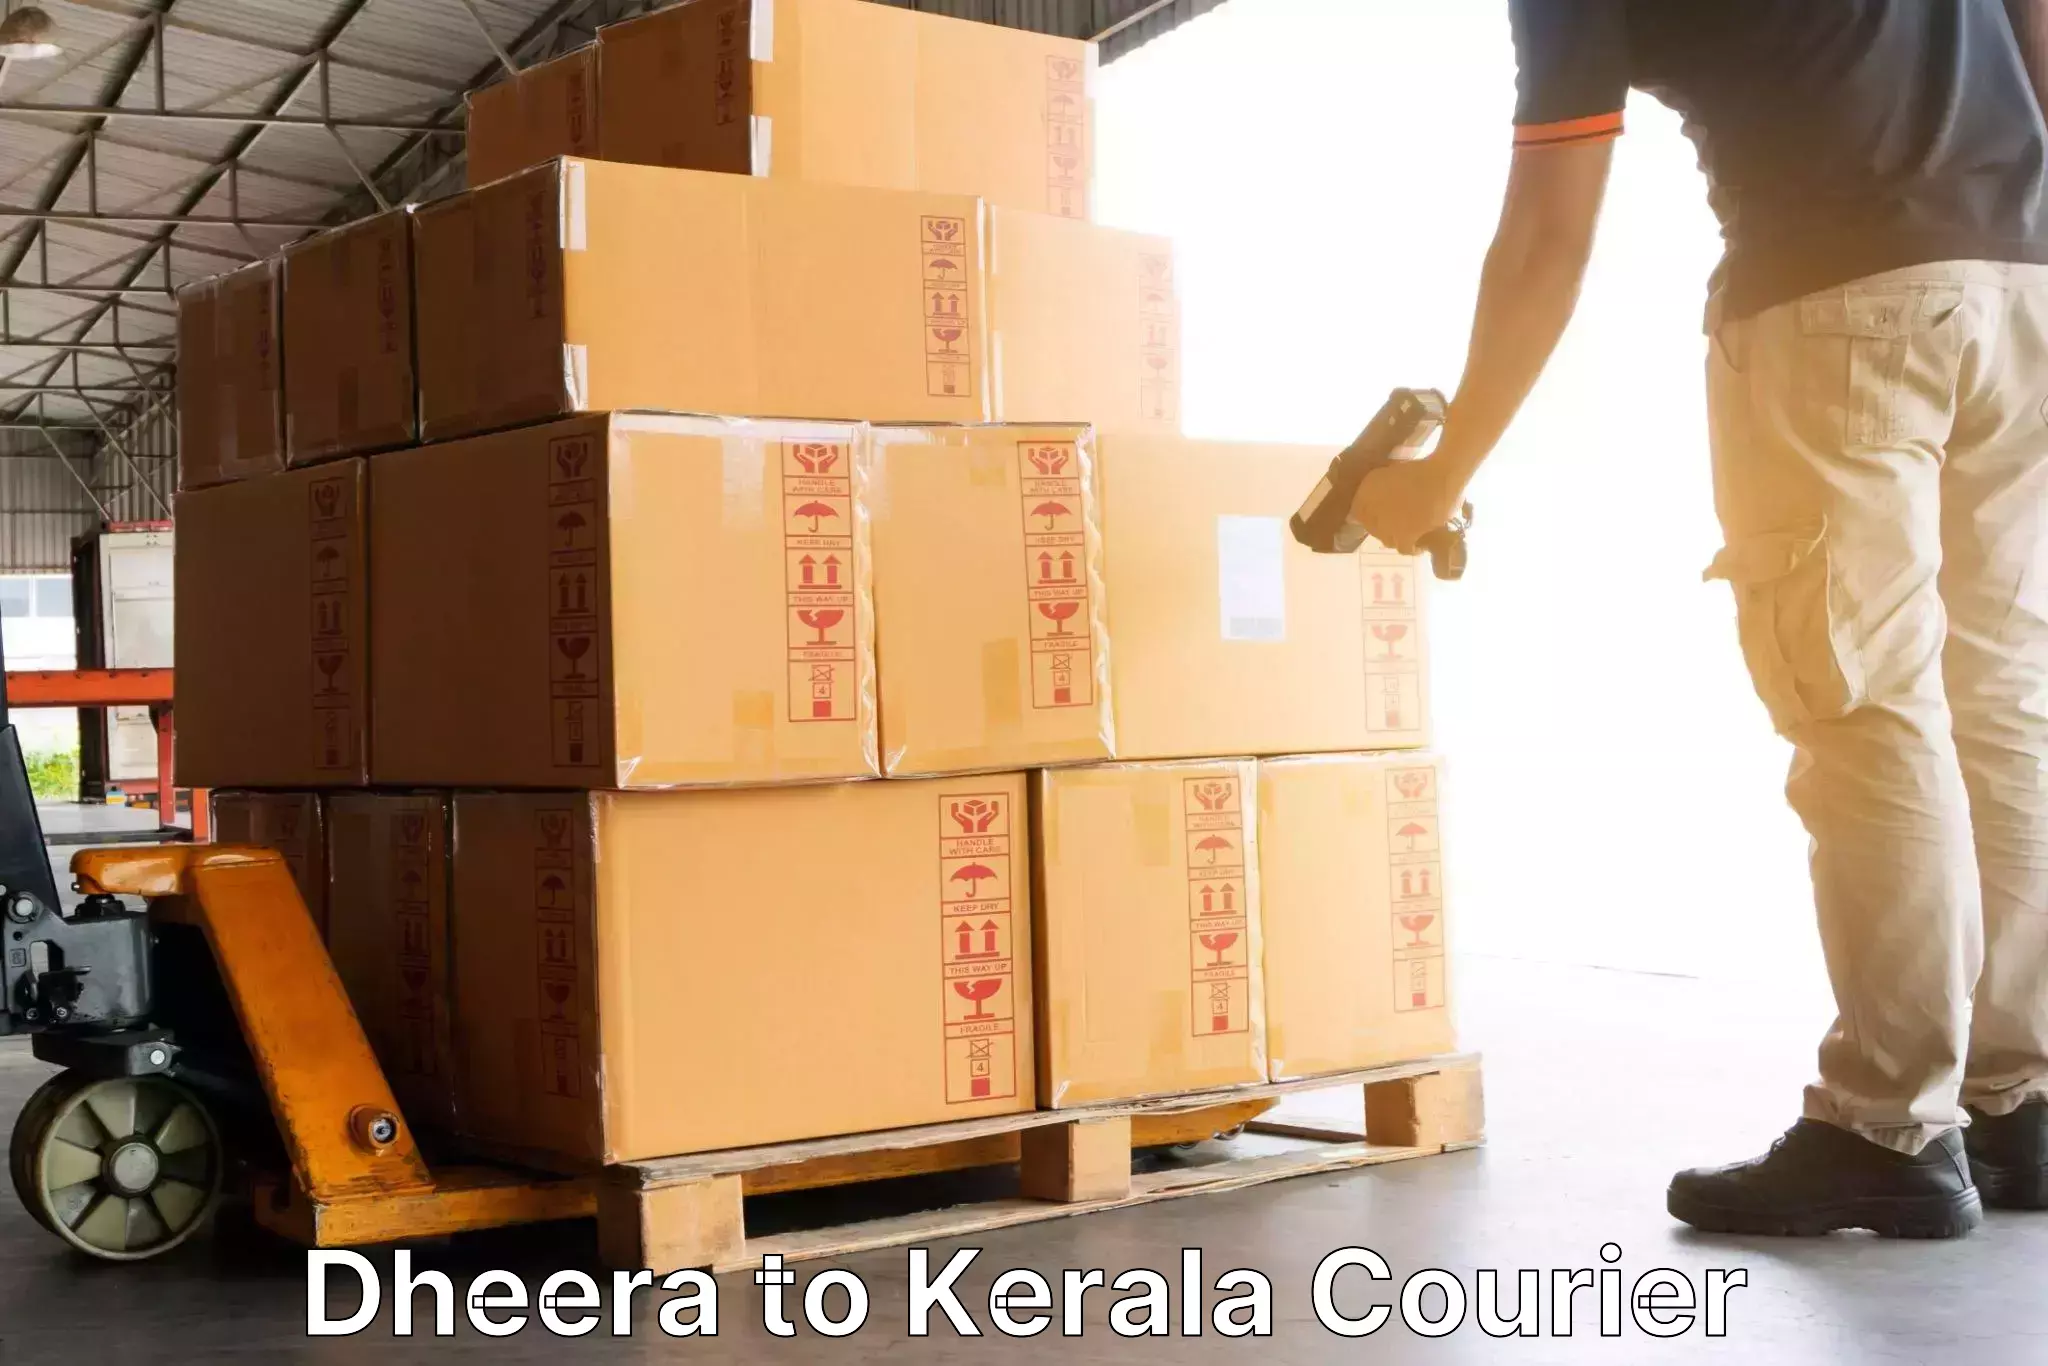 Courier service efficiency Dheera to Kerala